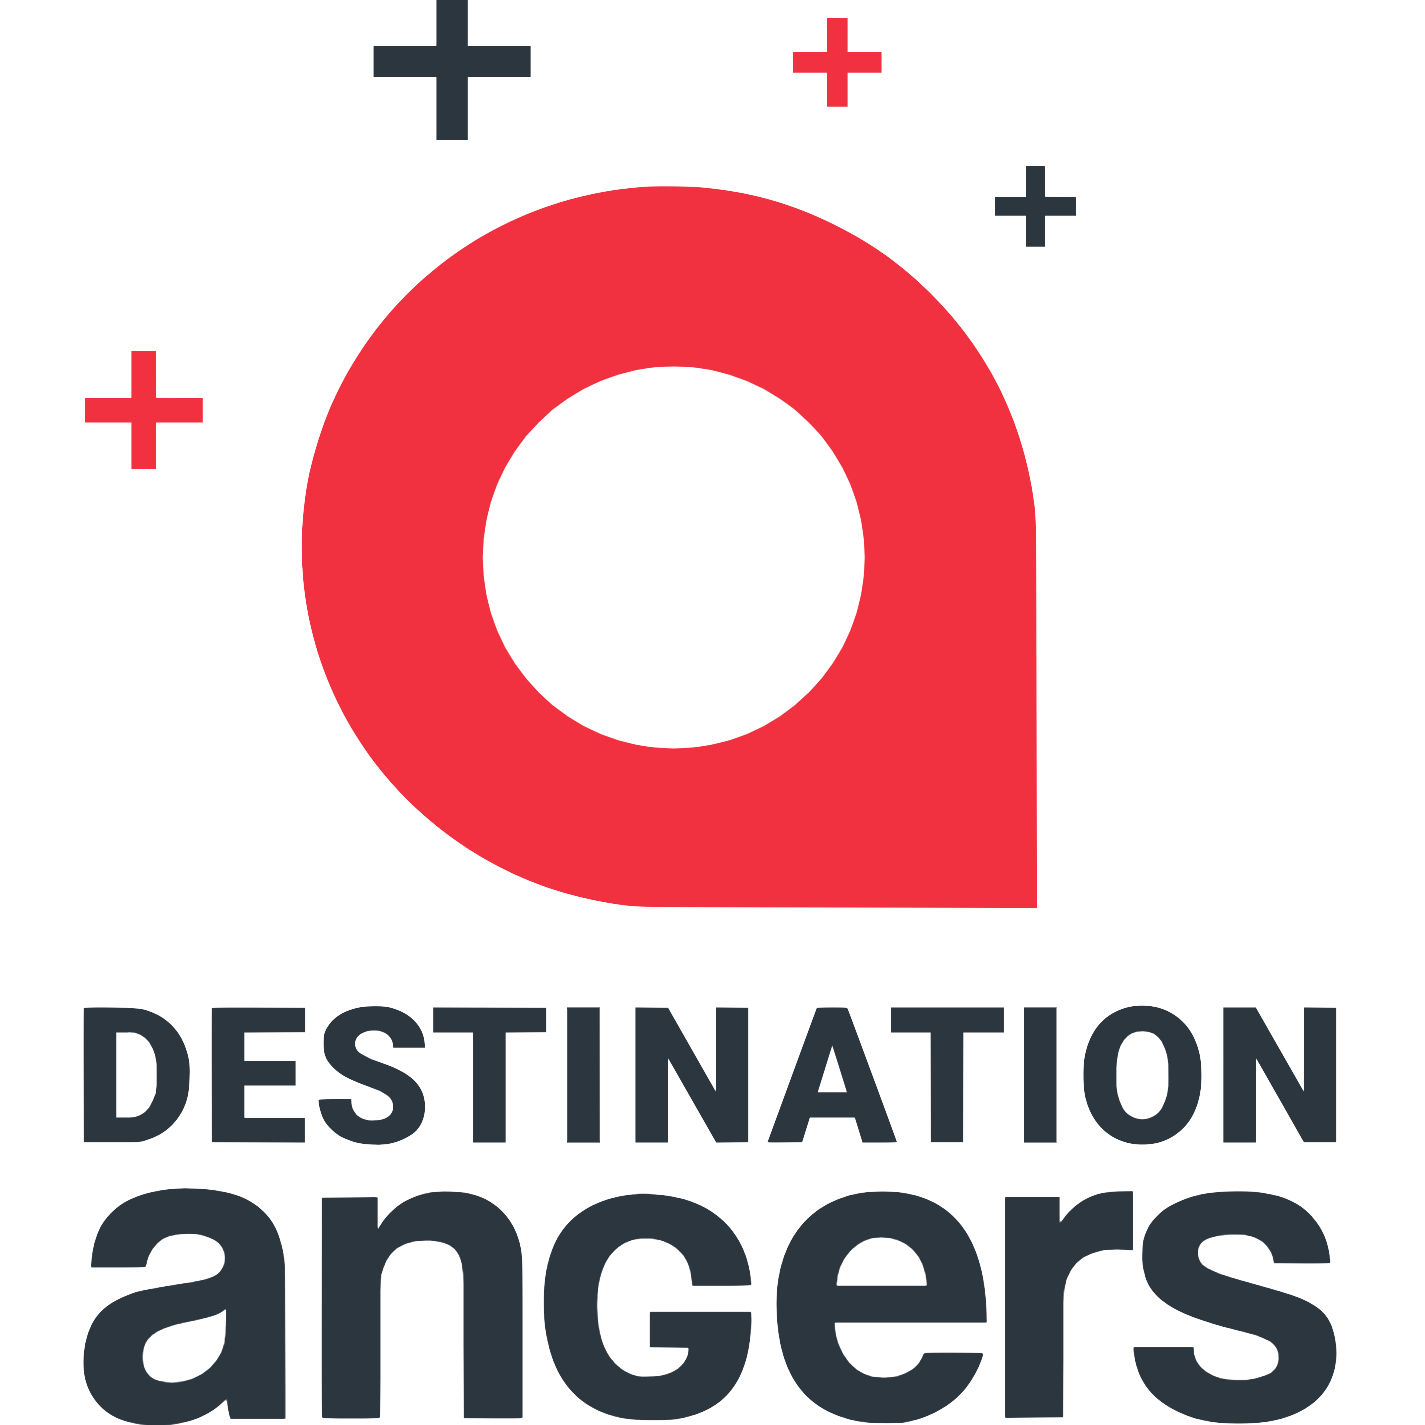 Destination Angers